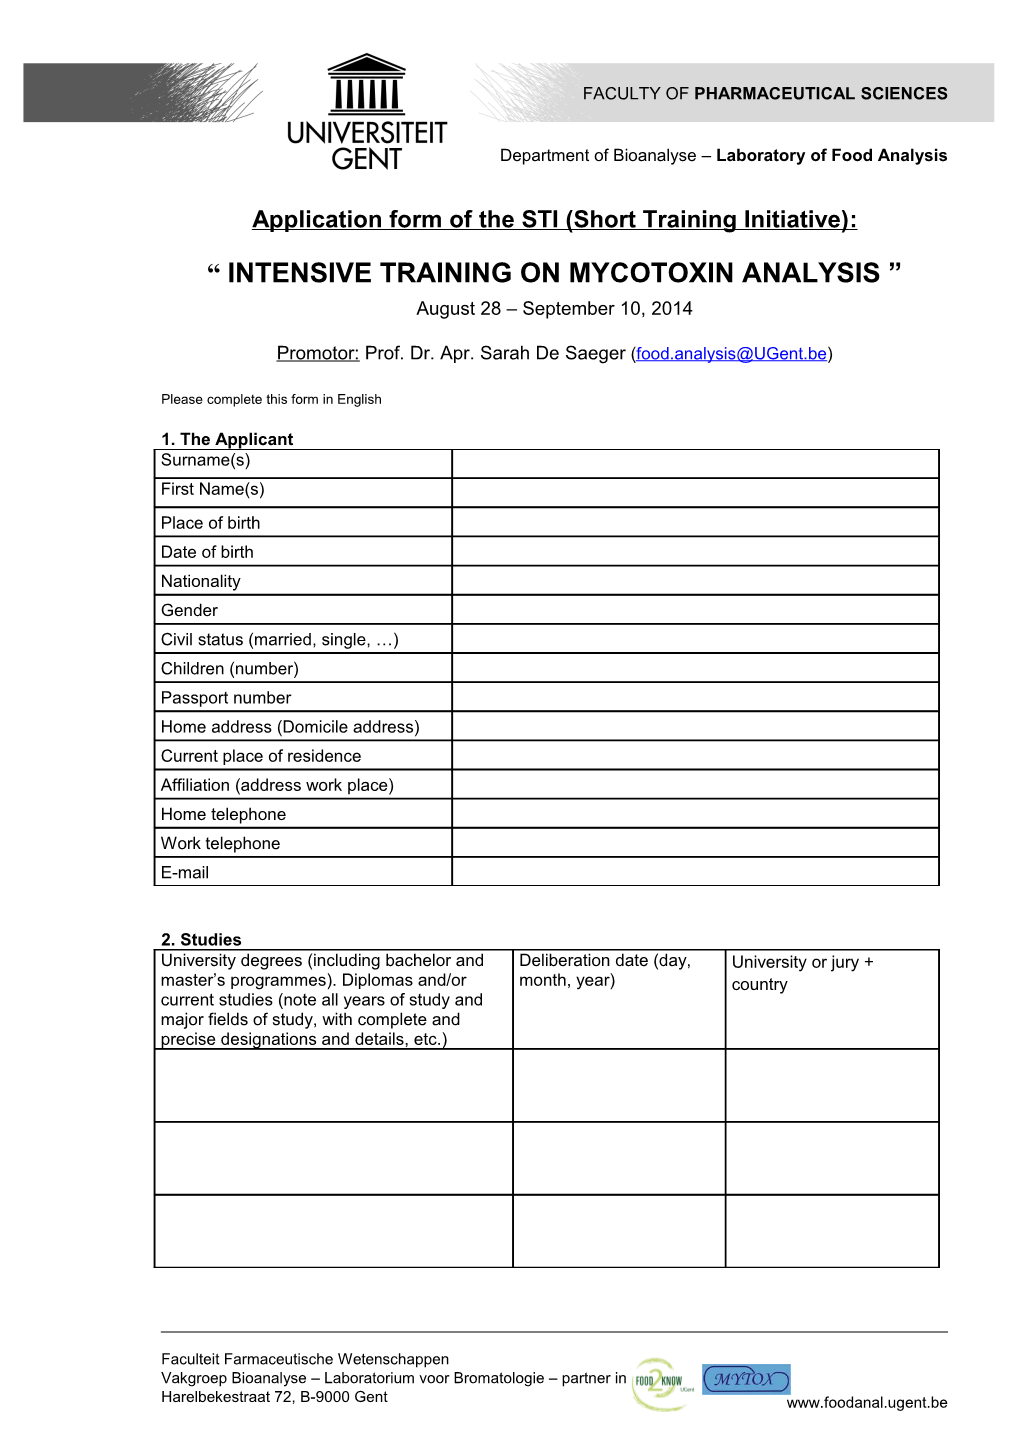 Application Form of the STI(Short Training Initiative)